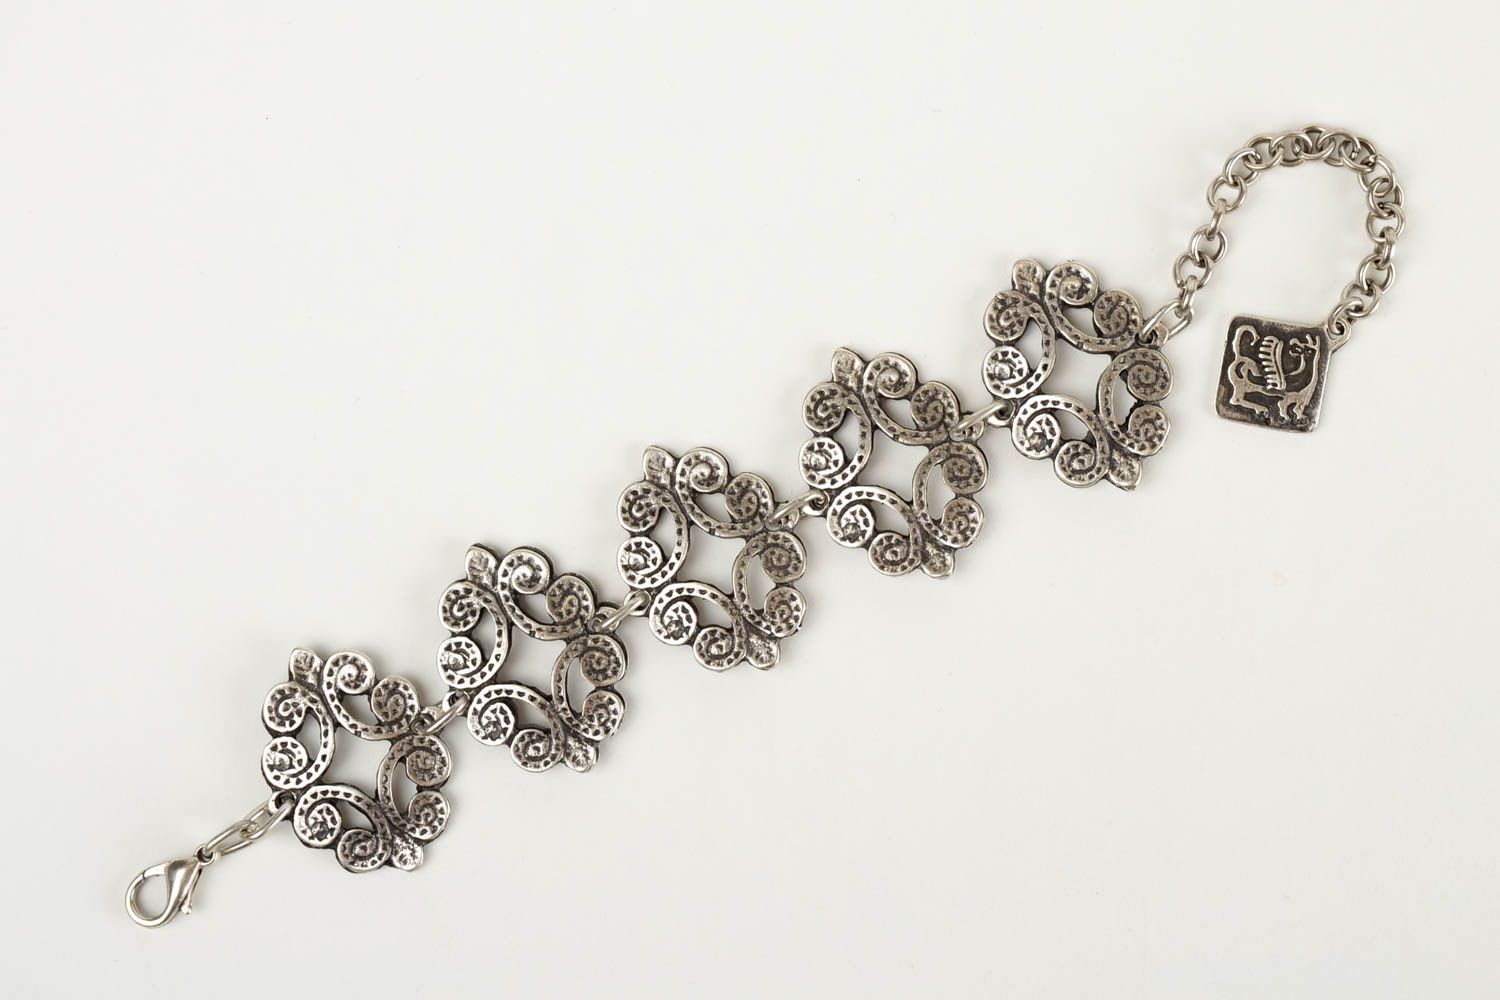 Stylish handmade metal bracelet wrist bracelet designs accessories for girls photo 3